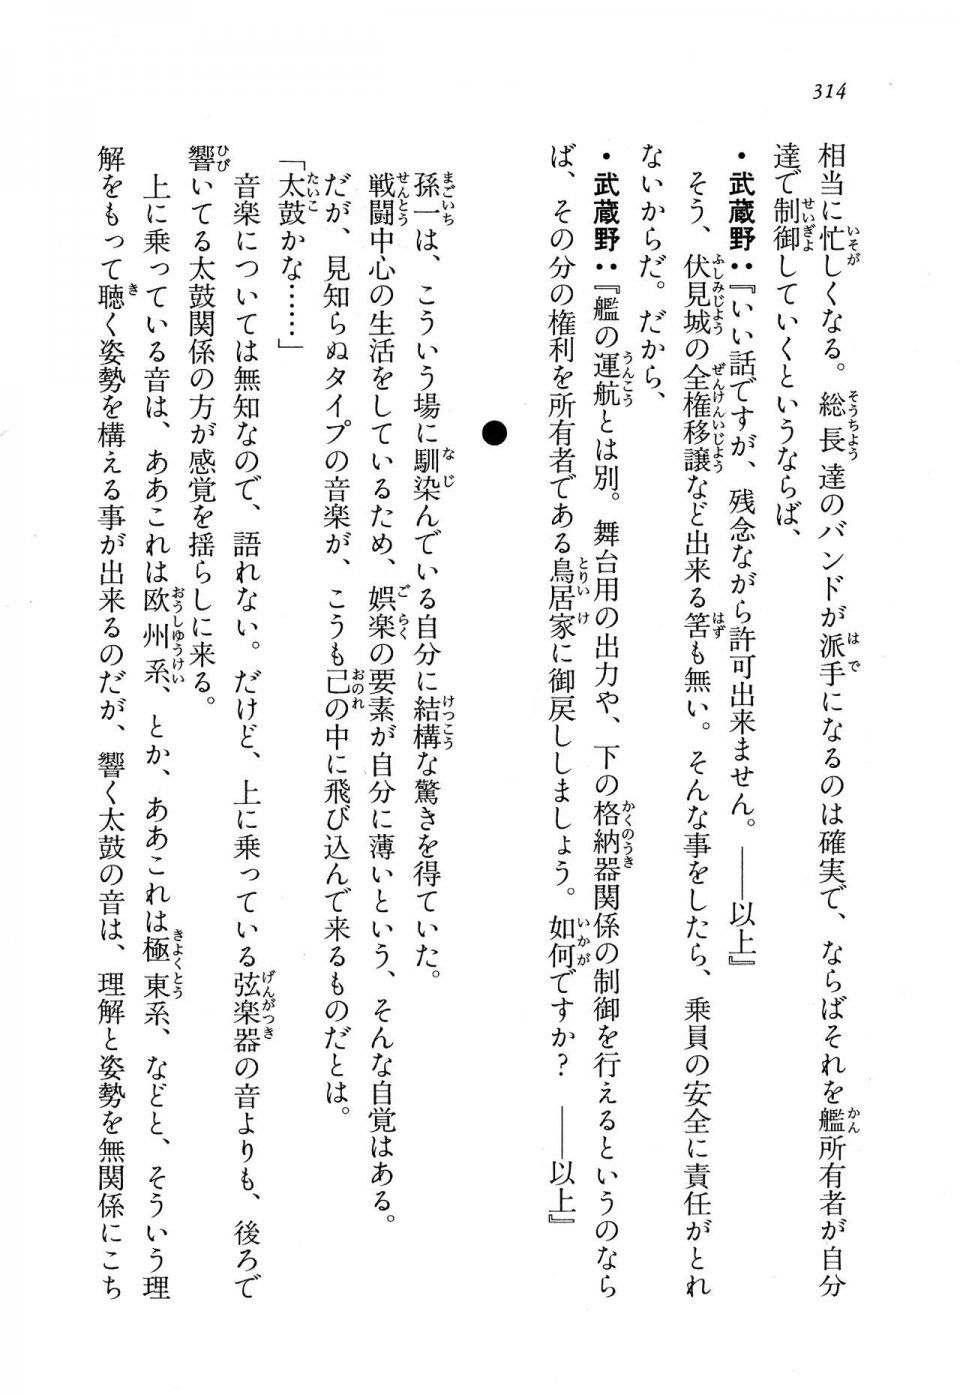 Kyoukai Senjou no Horizon BD Special Mininovel Vol 8(4B) - Photo #318